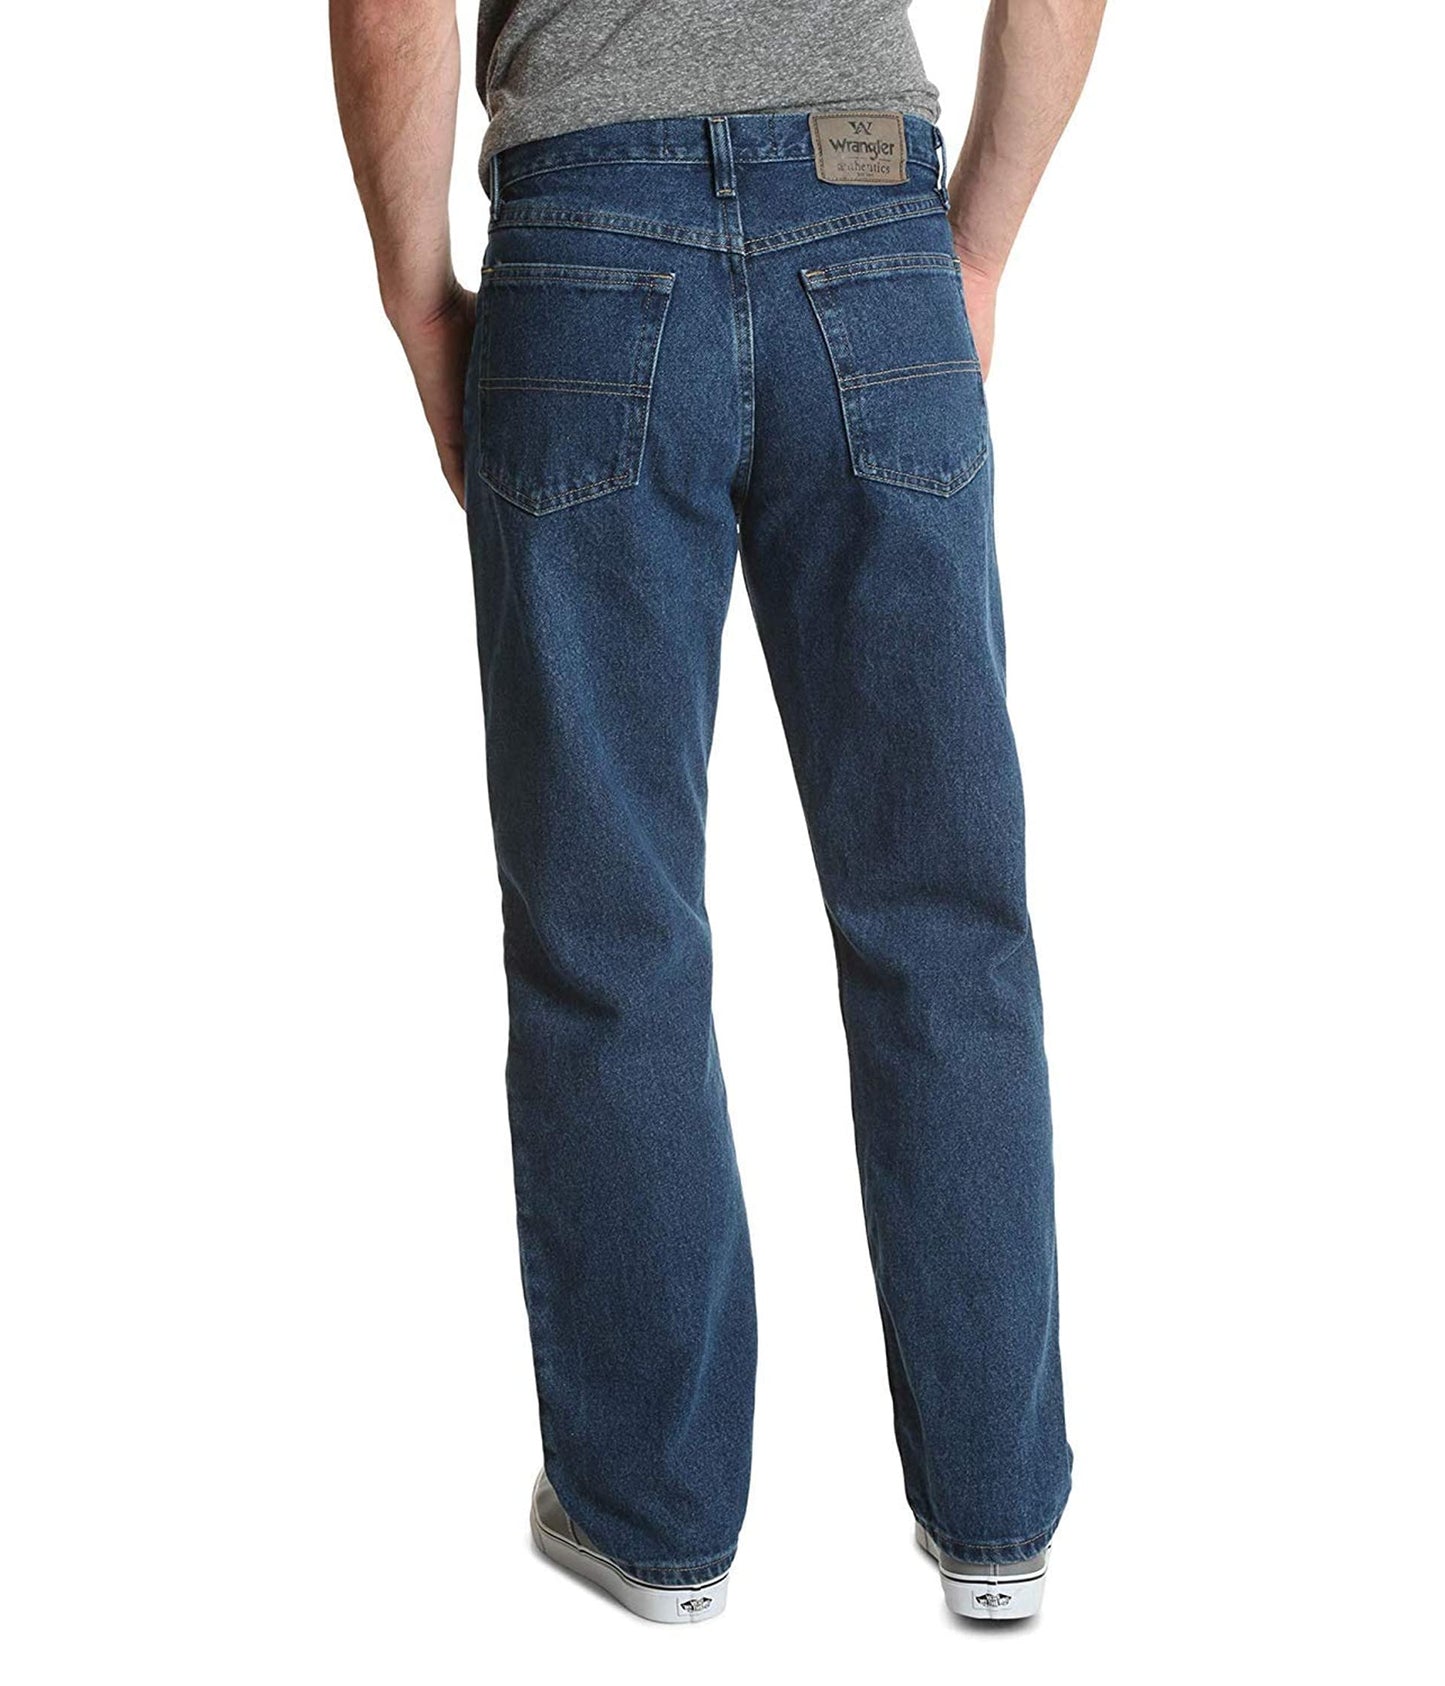 Wrangler Authentics Men's Classic 5-Pocket Relaxed Fit Cotton Jean, Dark Stonewash, 38W x 34L